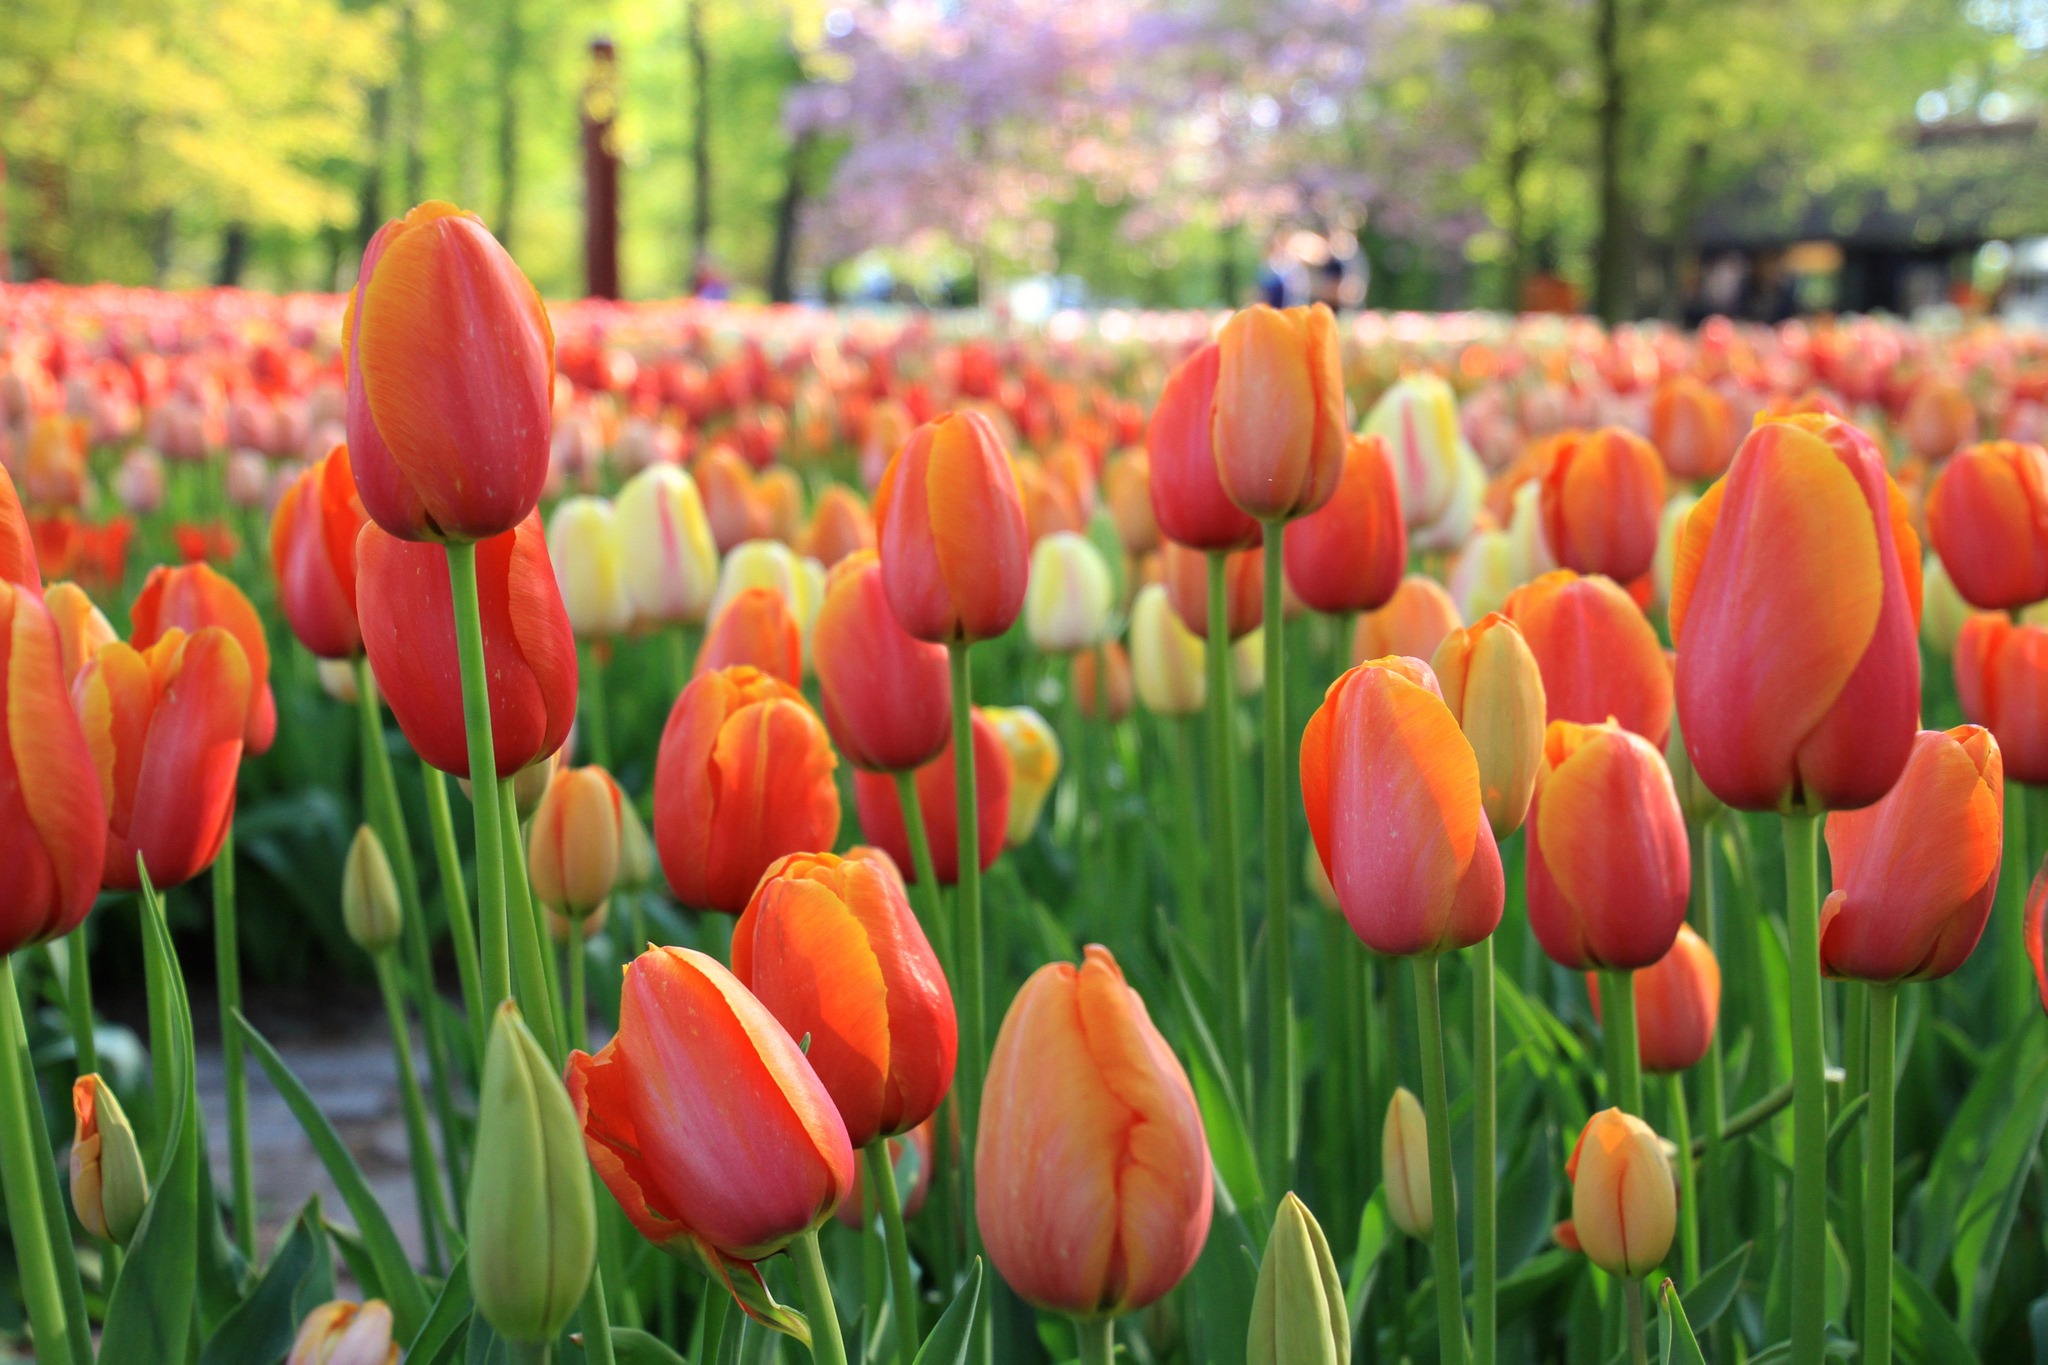 Happy Monday everyone! 🌷

Plan your visit to the tulips on:
> https://tulipfestivalamsterdam.com/

#tulips #tulipslover #mondaymood #mondayblues #orange #flowers #flowerstagram #holland #netherlands #spring #tulpen  #tulipas #tulipes #printemps #春天 #वसंत